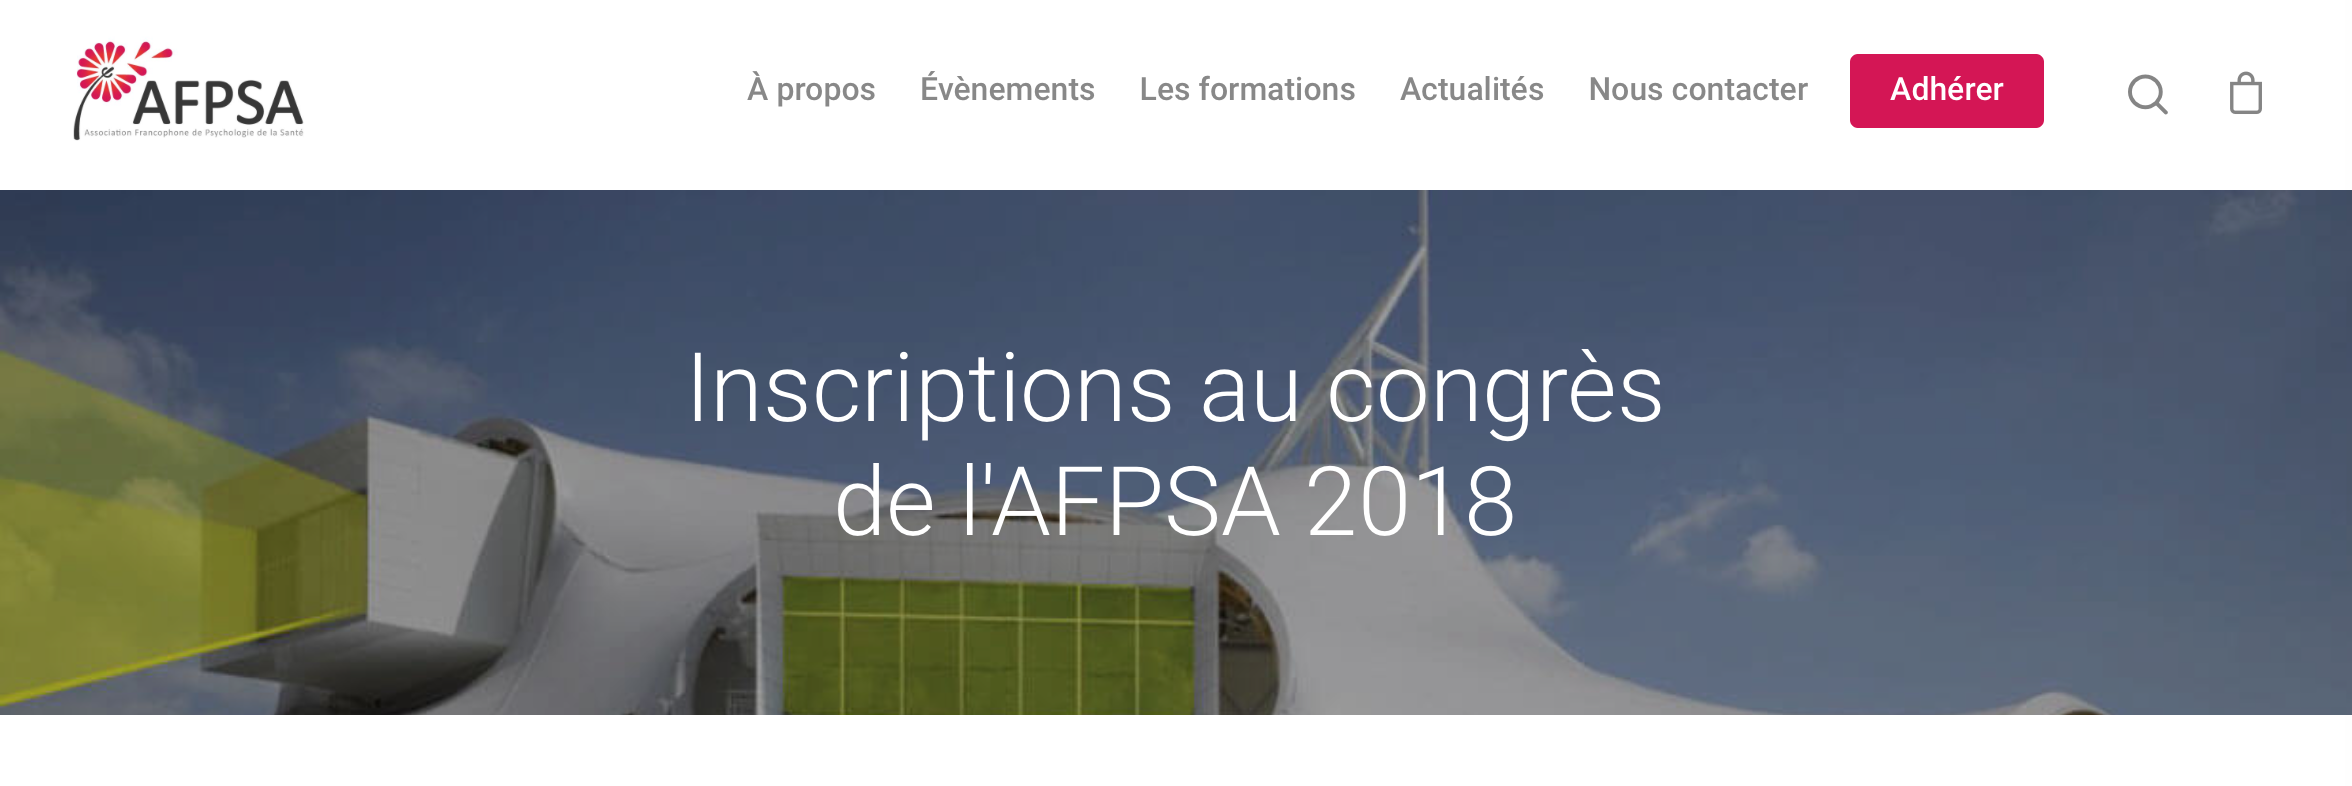 Inscritpion APFSA Congrès Metz